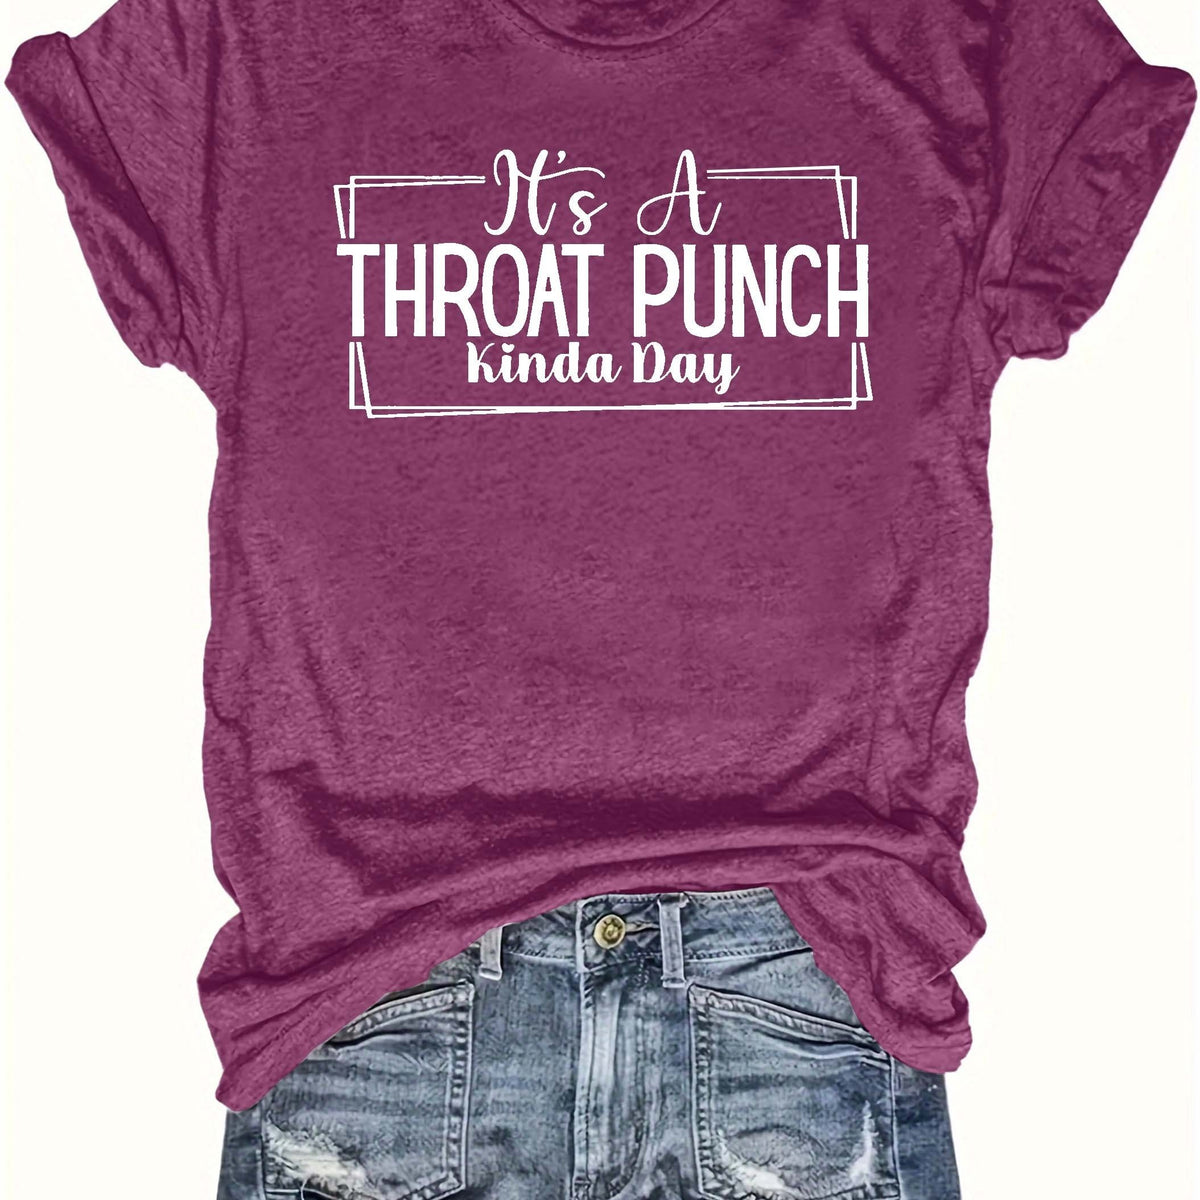 Throat Punch T-shirt